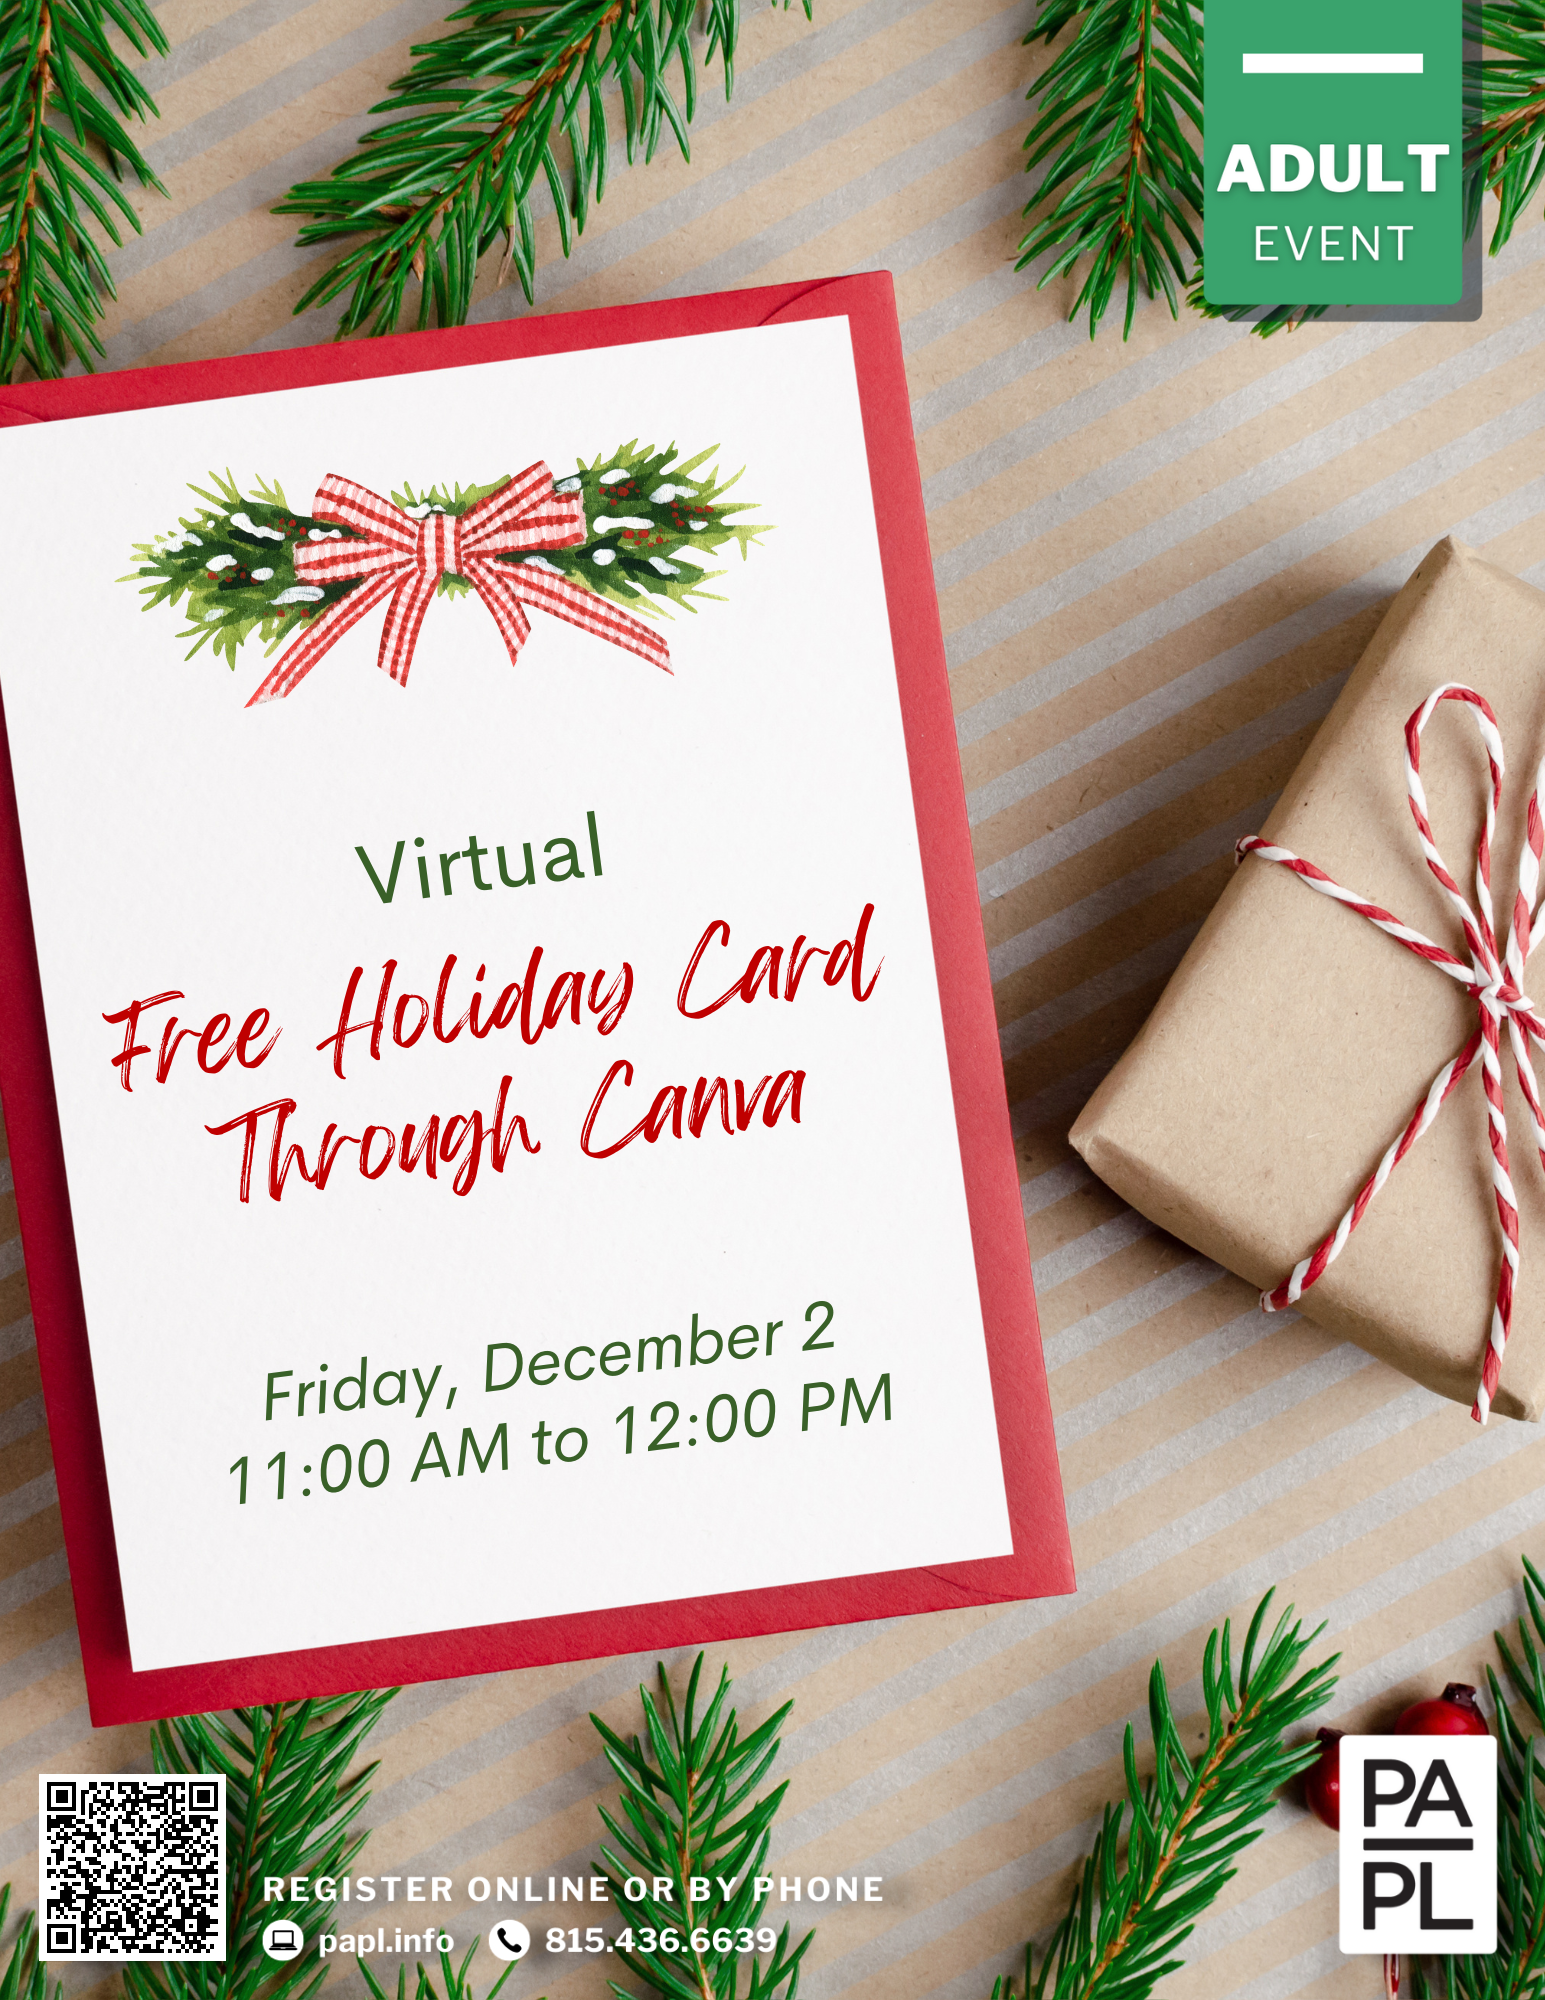 Virtual: Free Holiday Card Through Canva